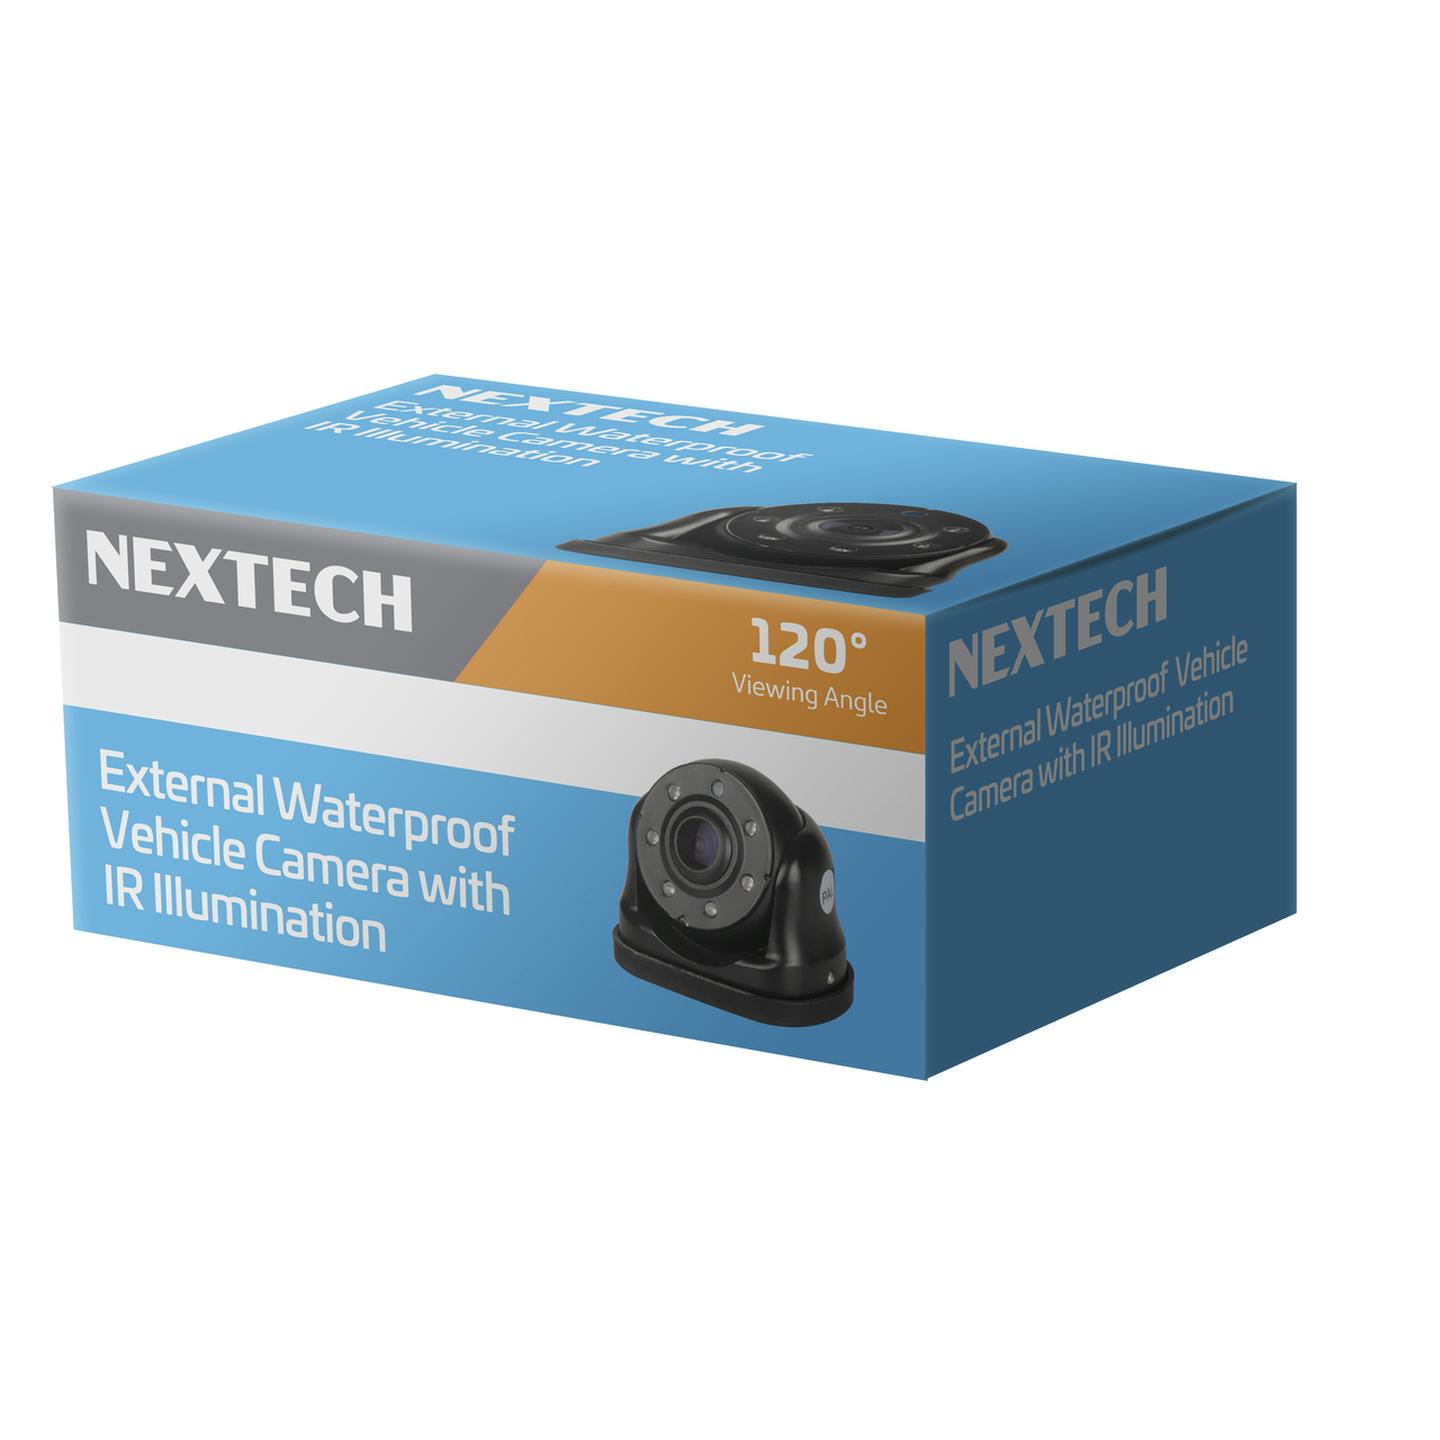 1080p External Waterproof IP69 Vehicle Camera with IR Illumination and 120deg Viewing Angle